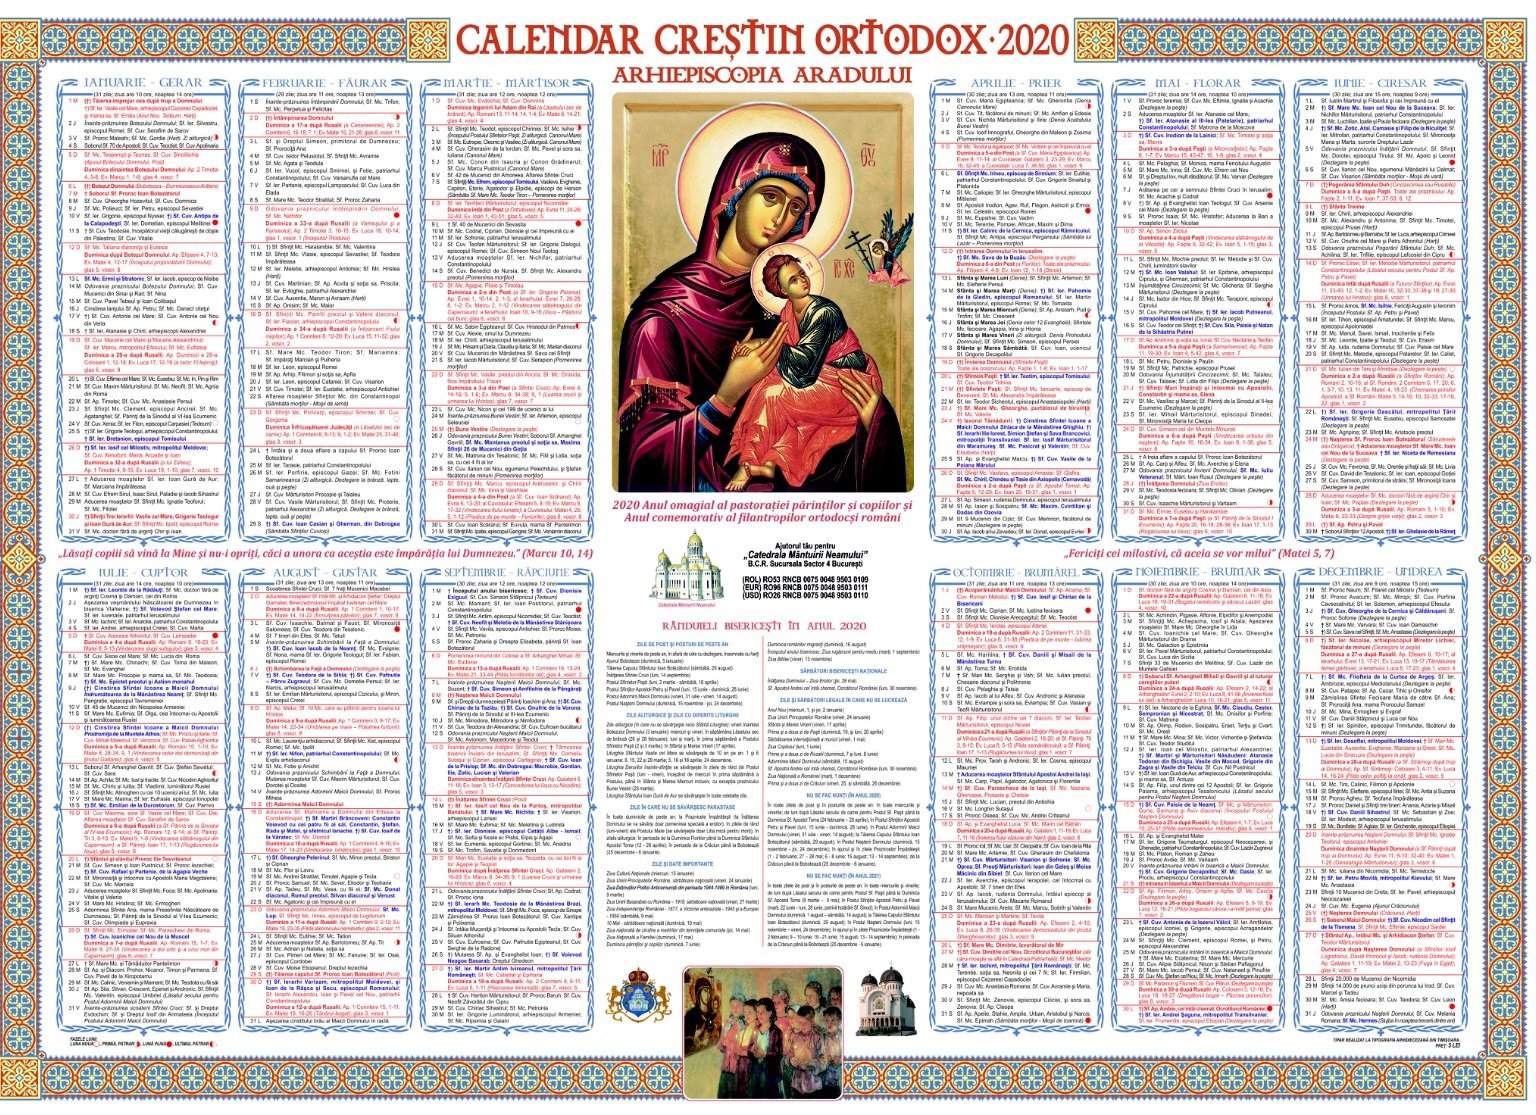 calendar-ortodox-2021-calendar-daily-calendar-template-calendar